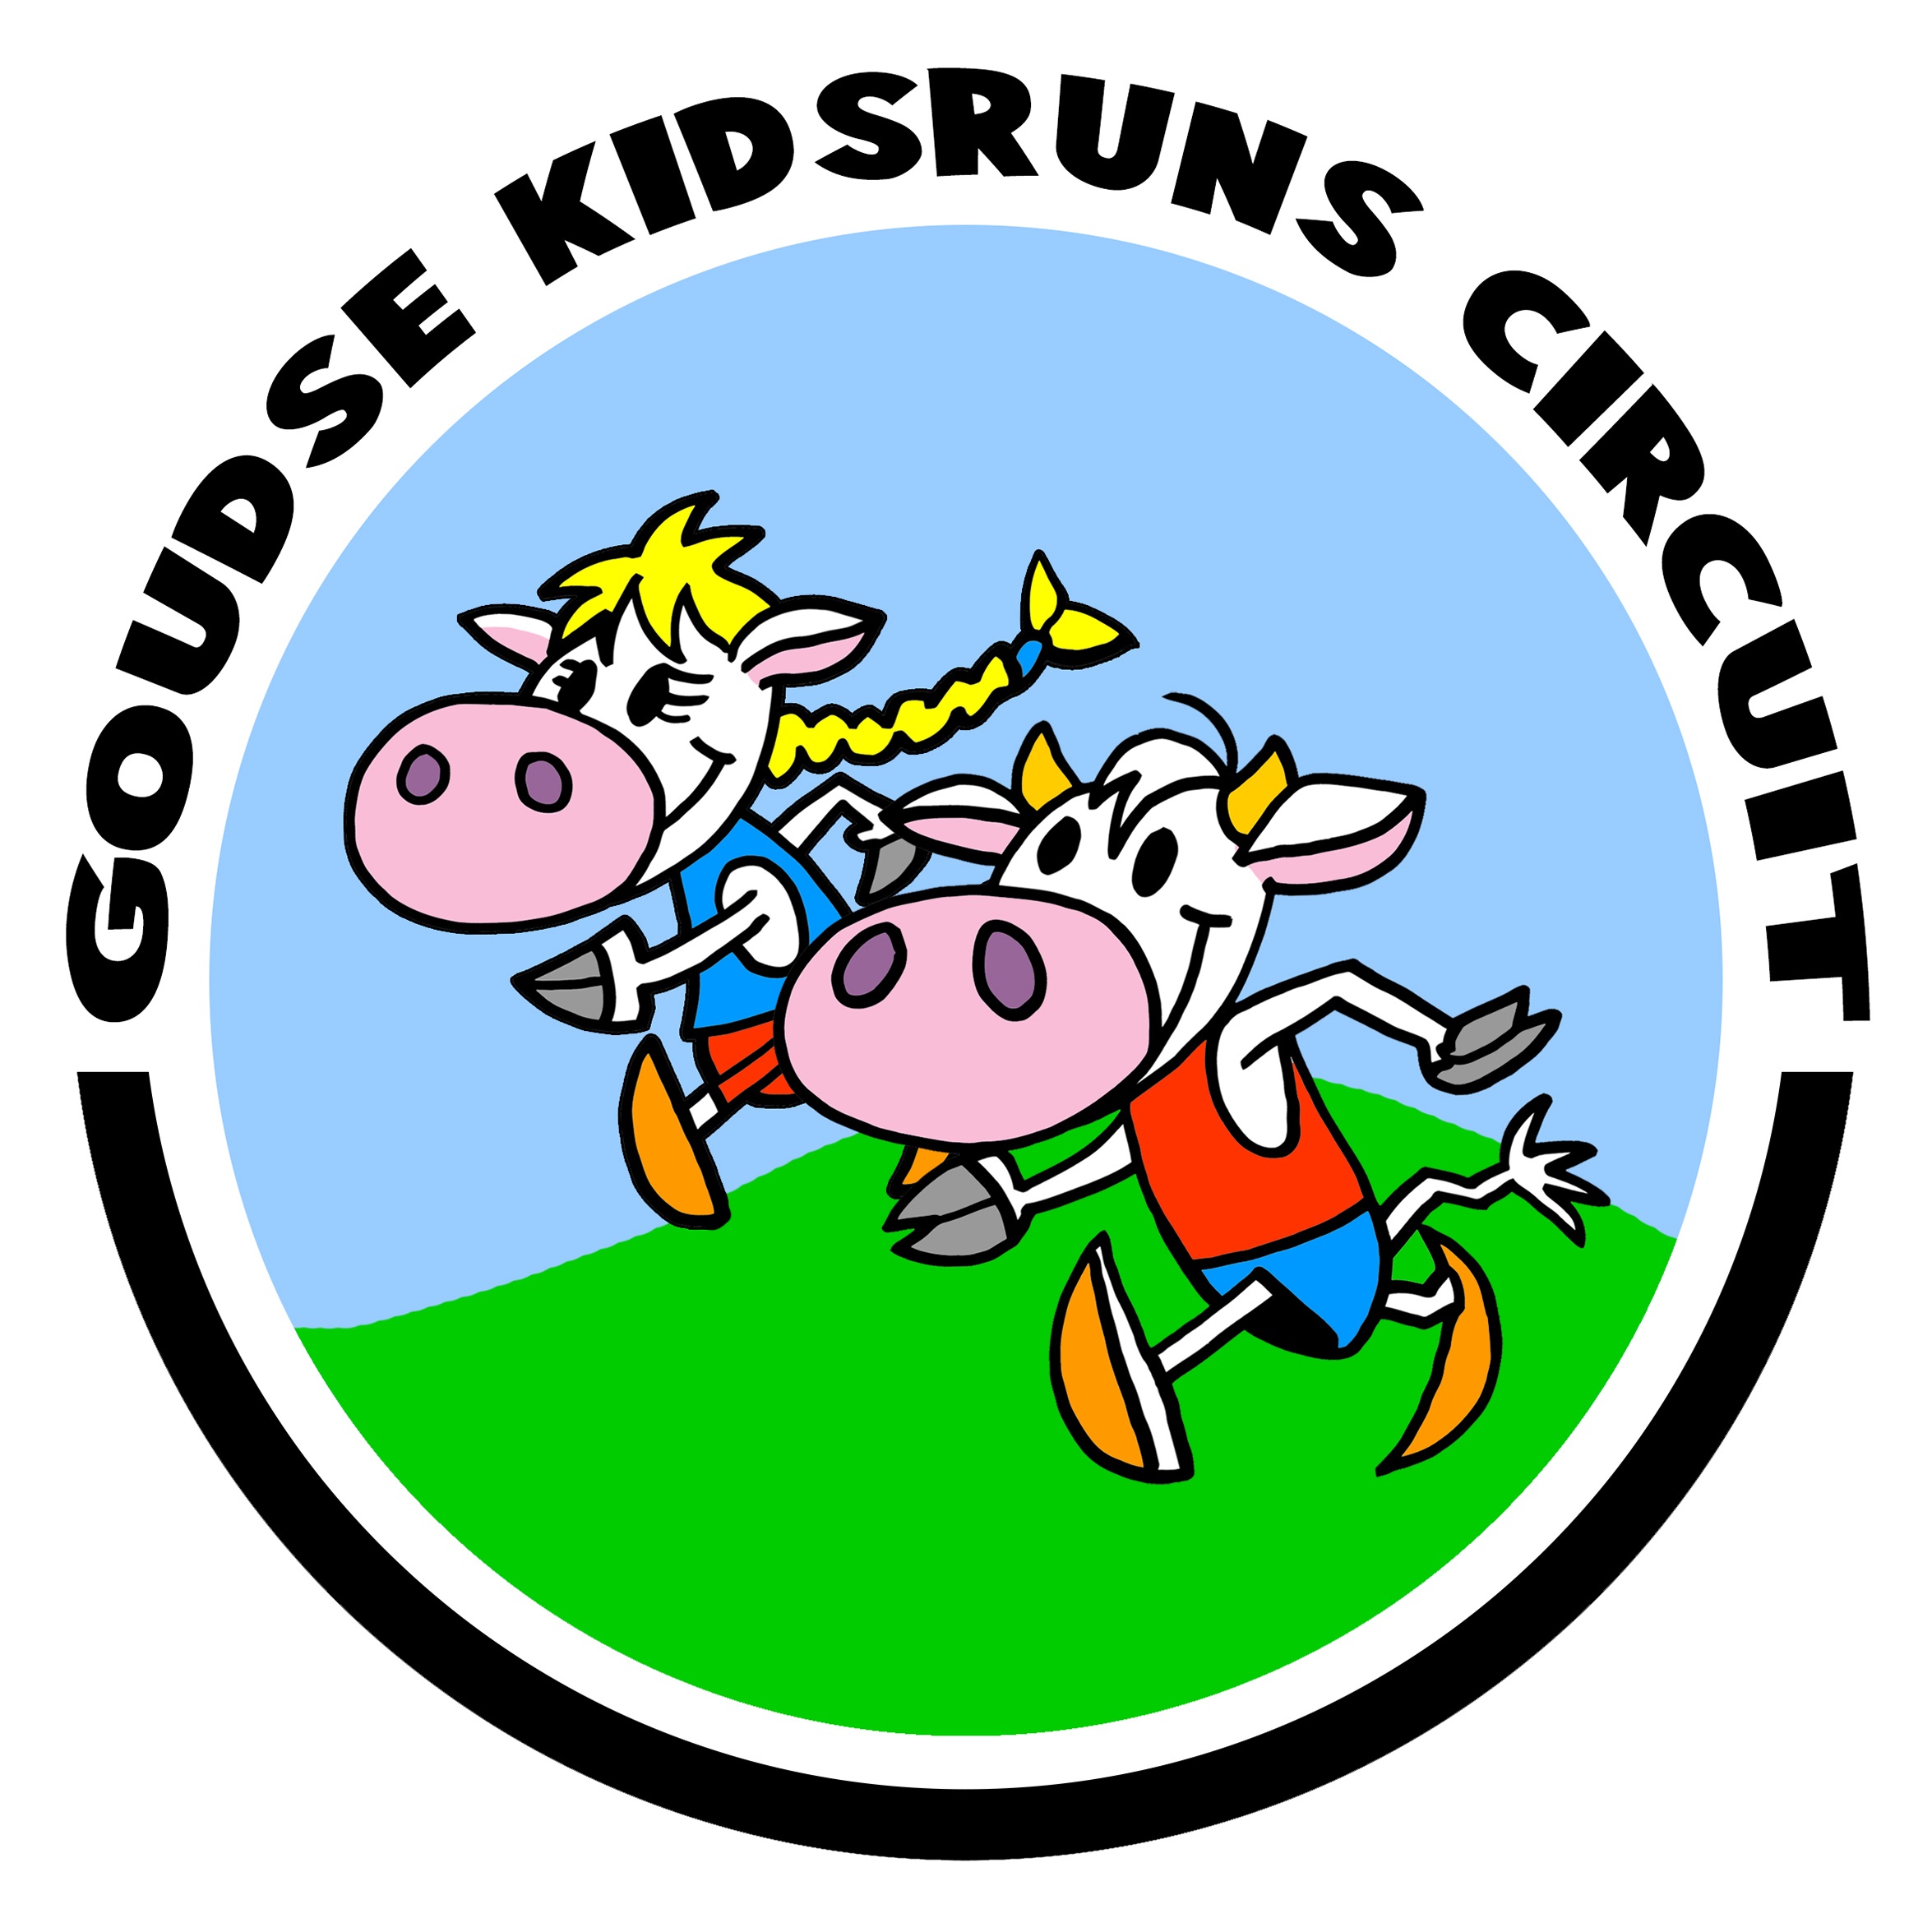 GKRC logo 2